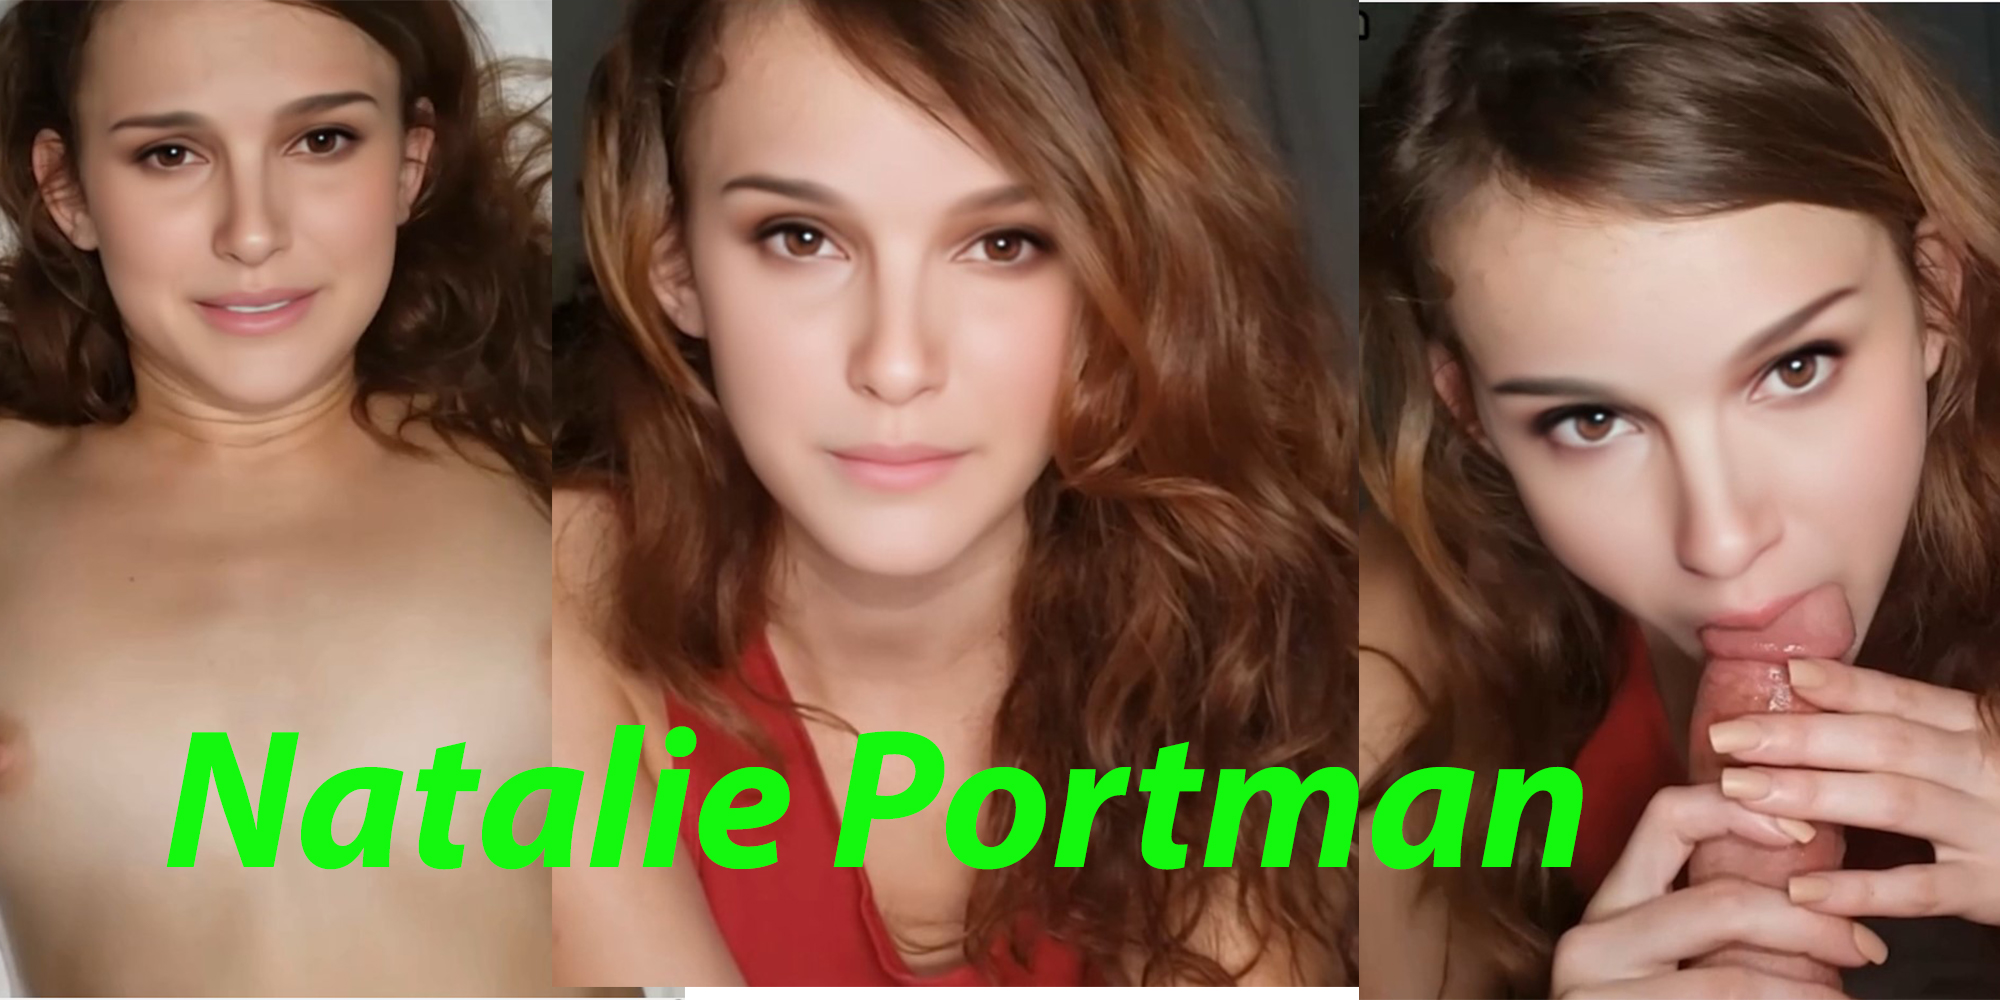 Natalie Portman​​​​​​​ sleeps with you